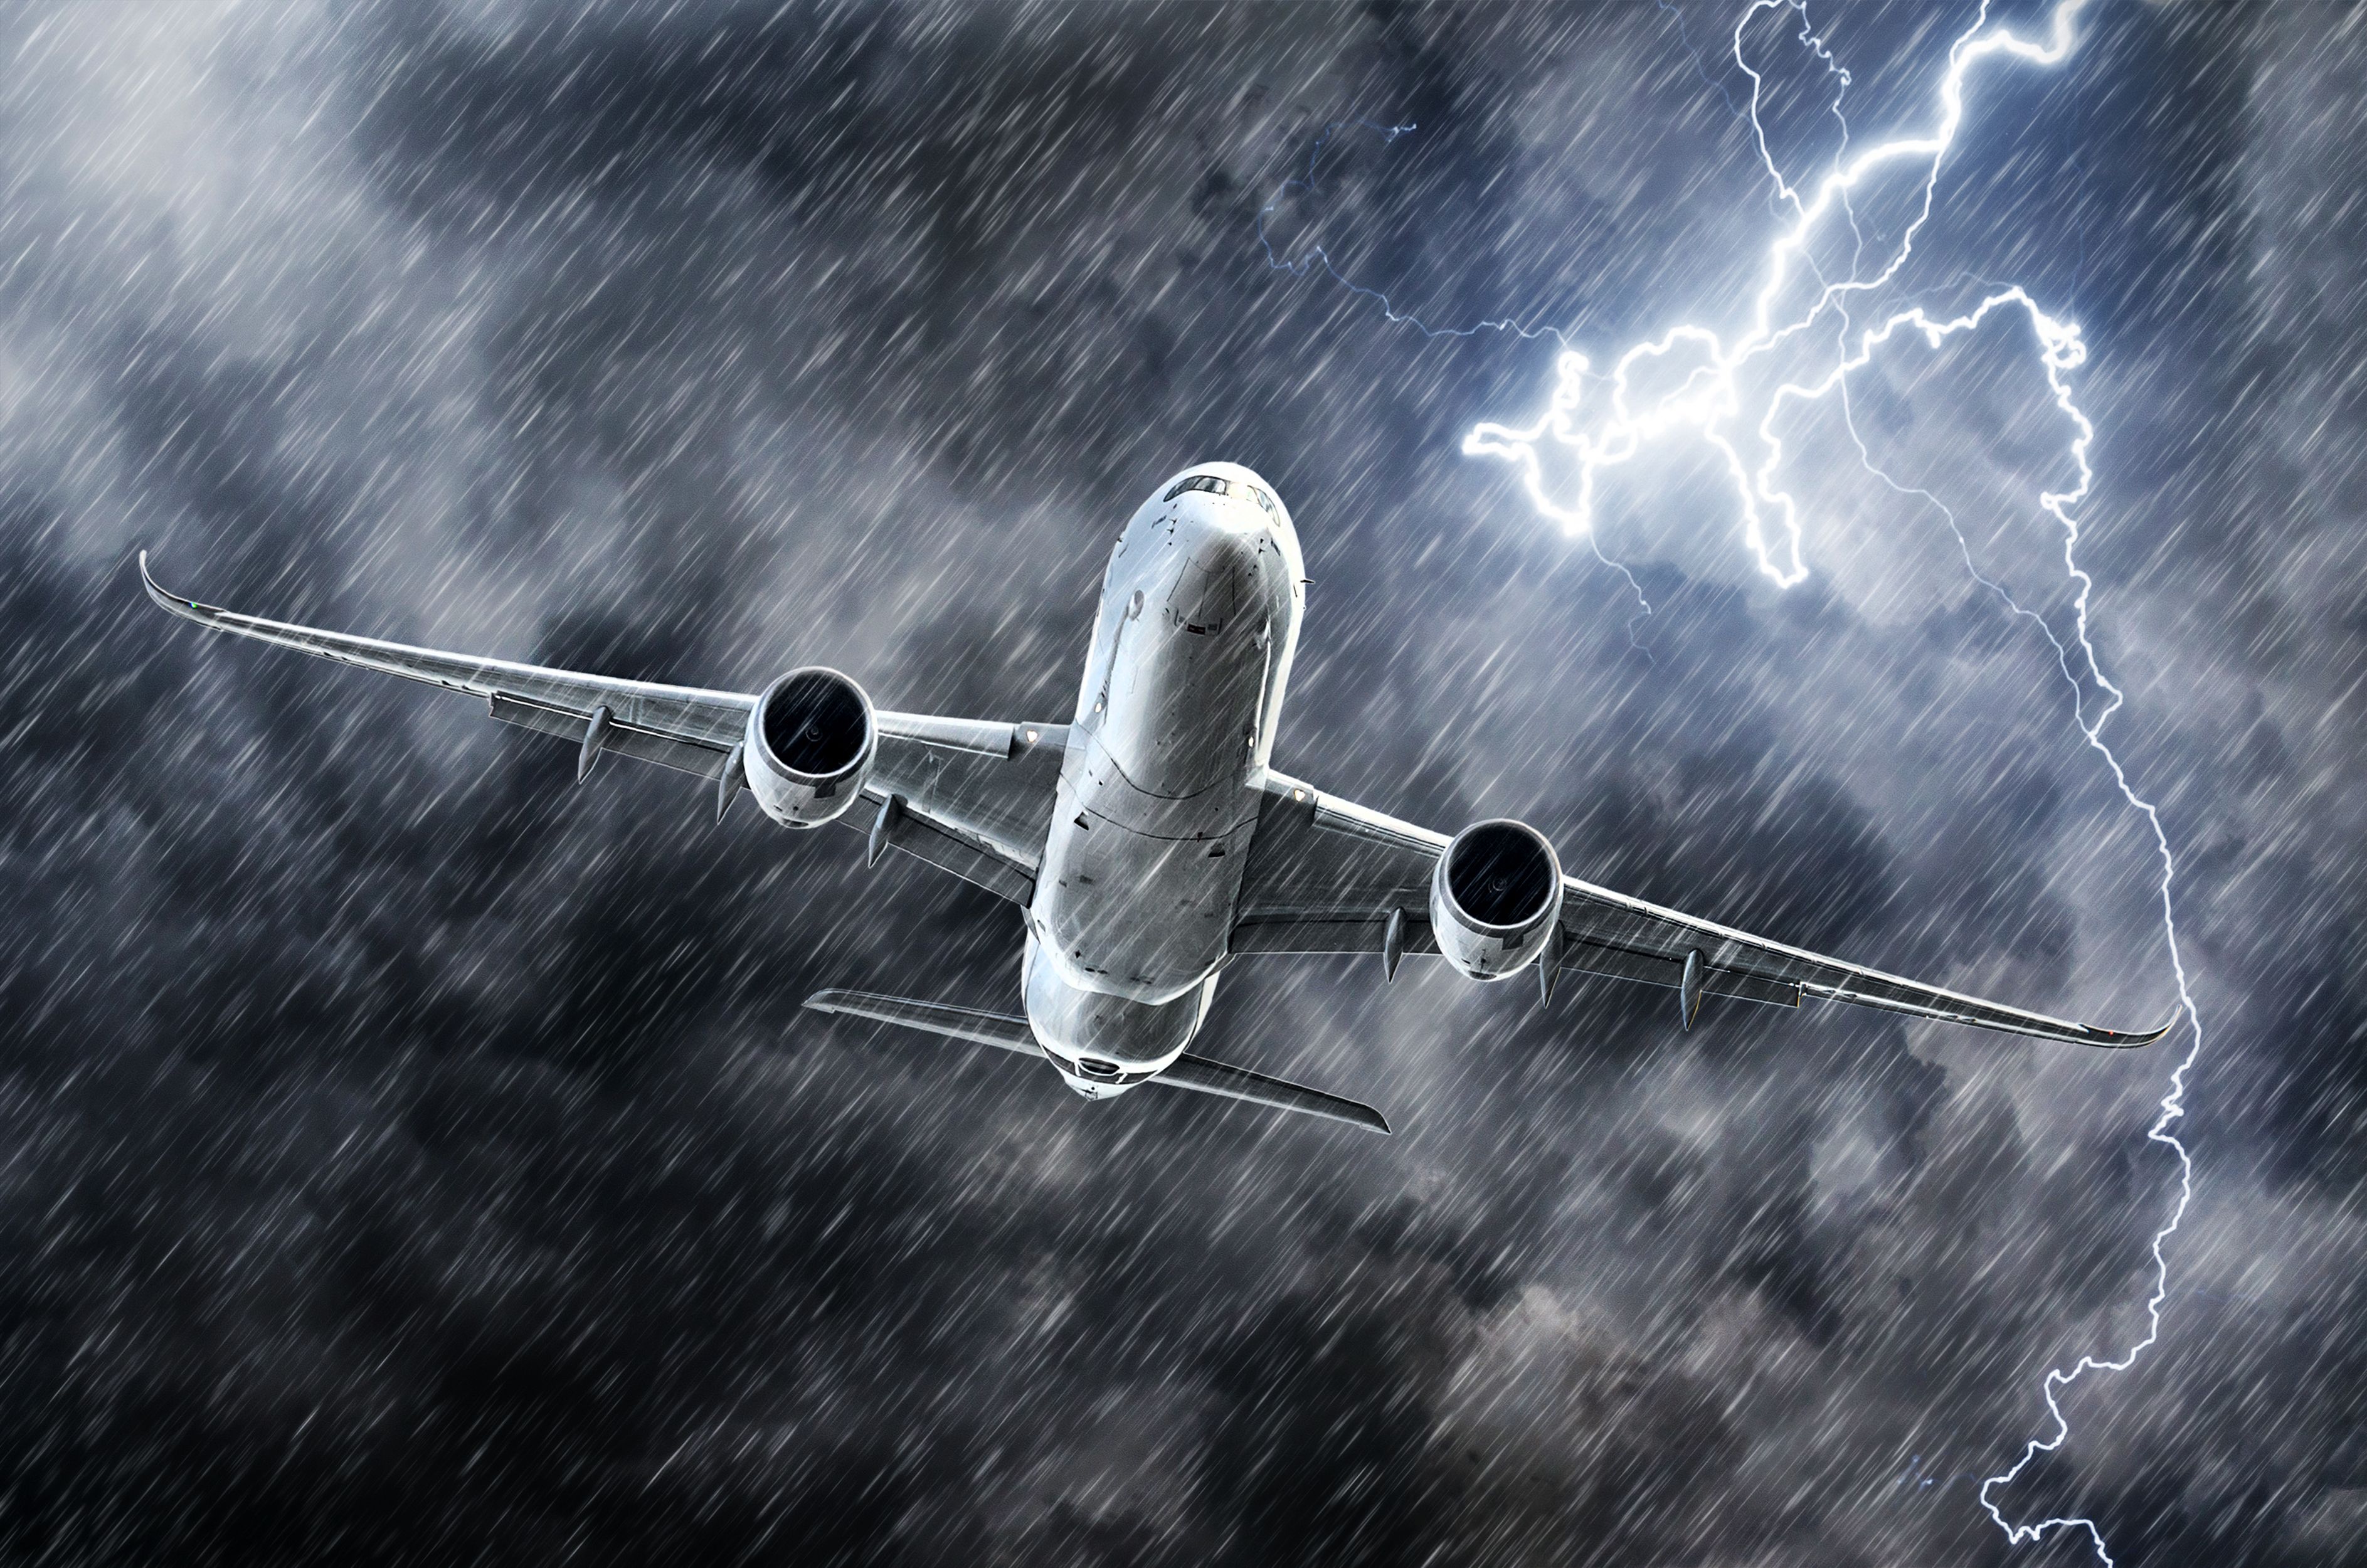 Powerful thunderstorm lightning strike and heavy rain in the sky passenger airplane_3_2_1055029697